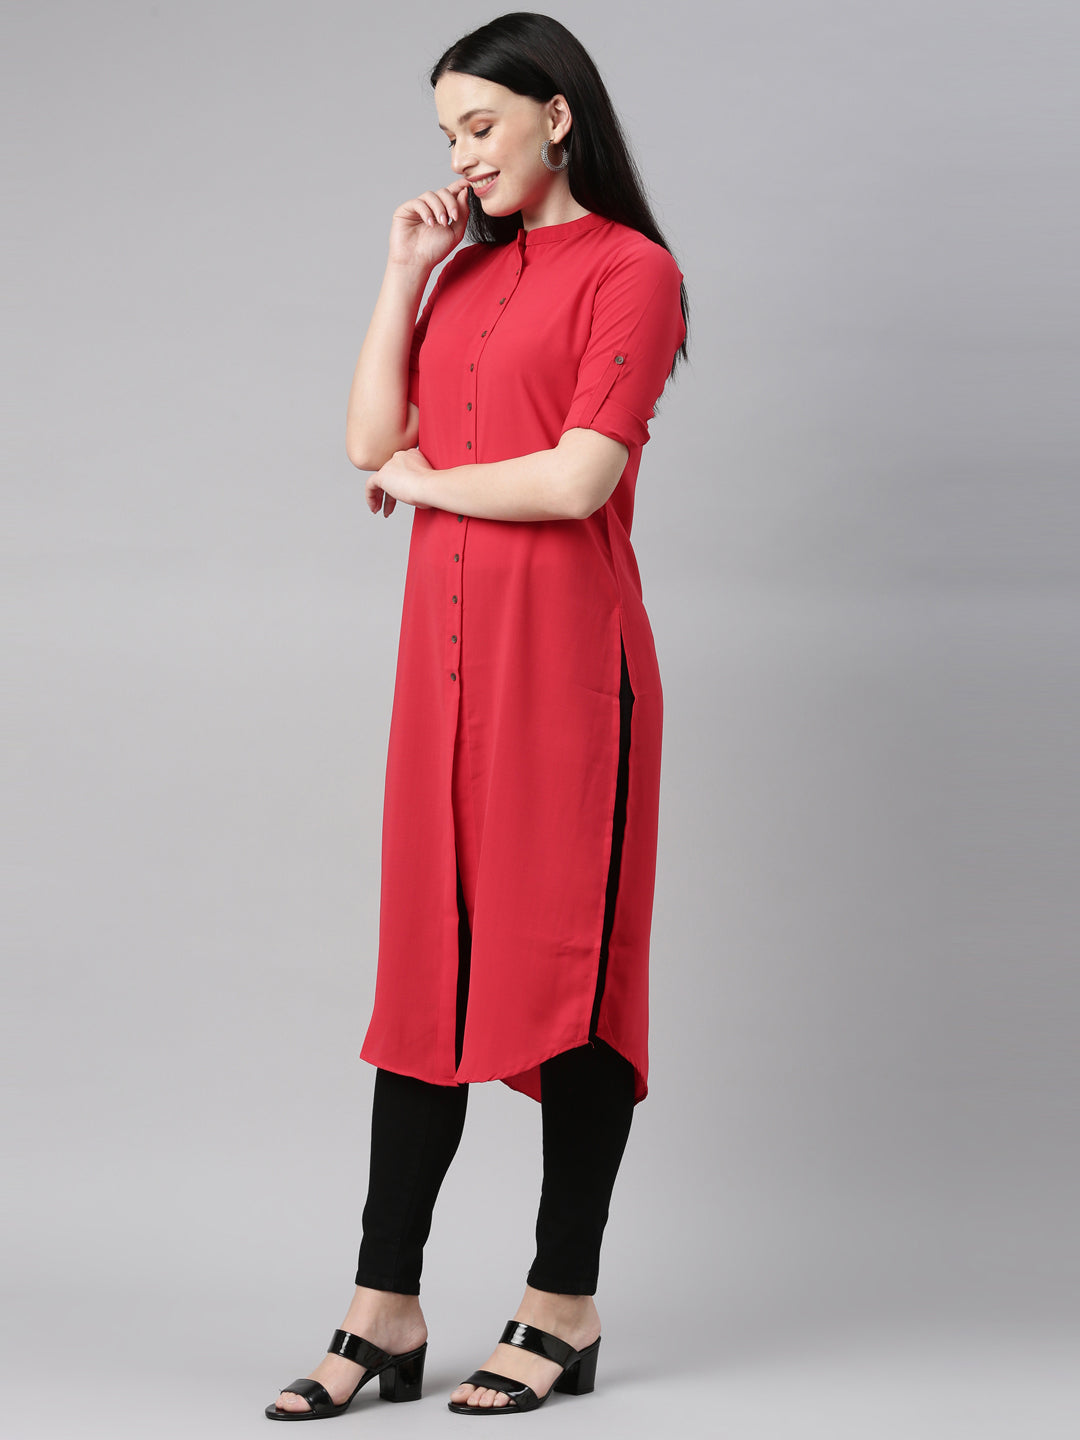 Neeru's Red Color Slub Rayon Fabric Kurta